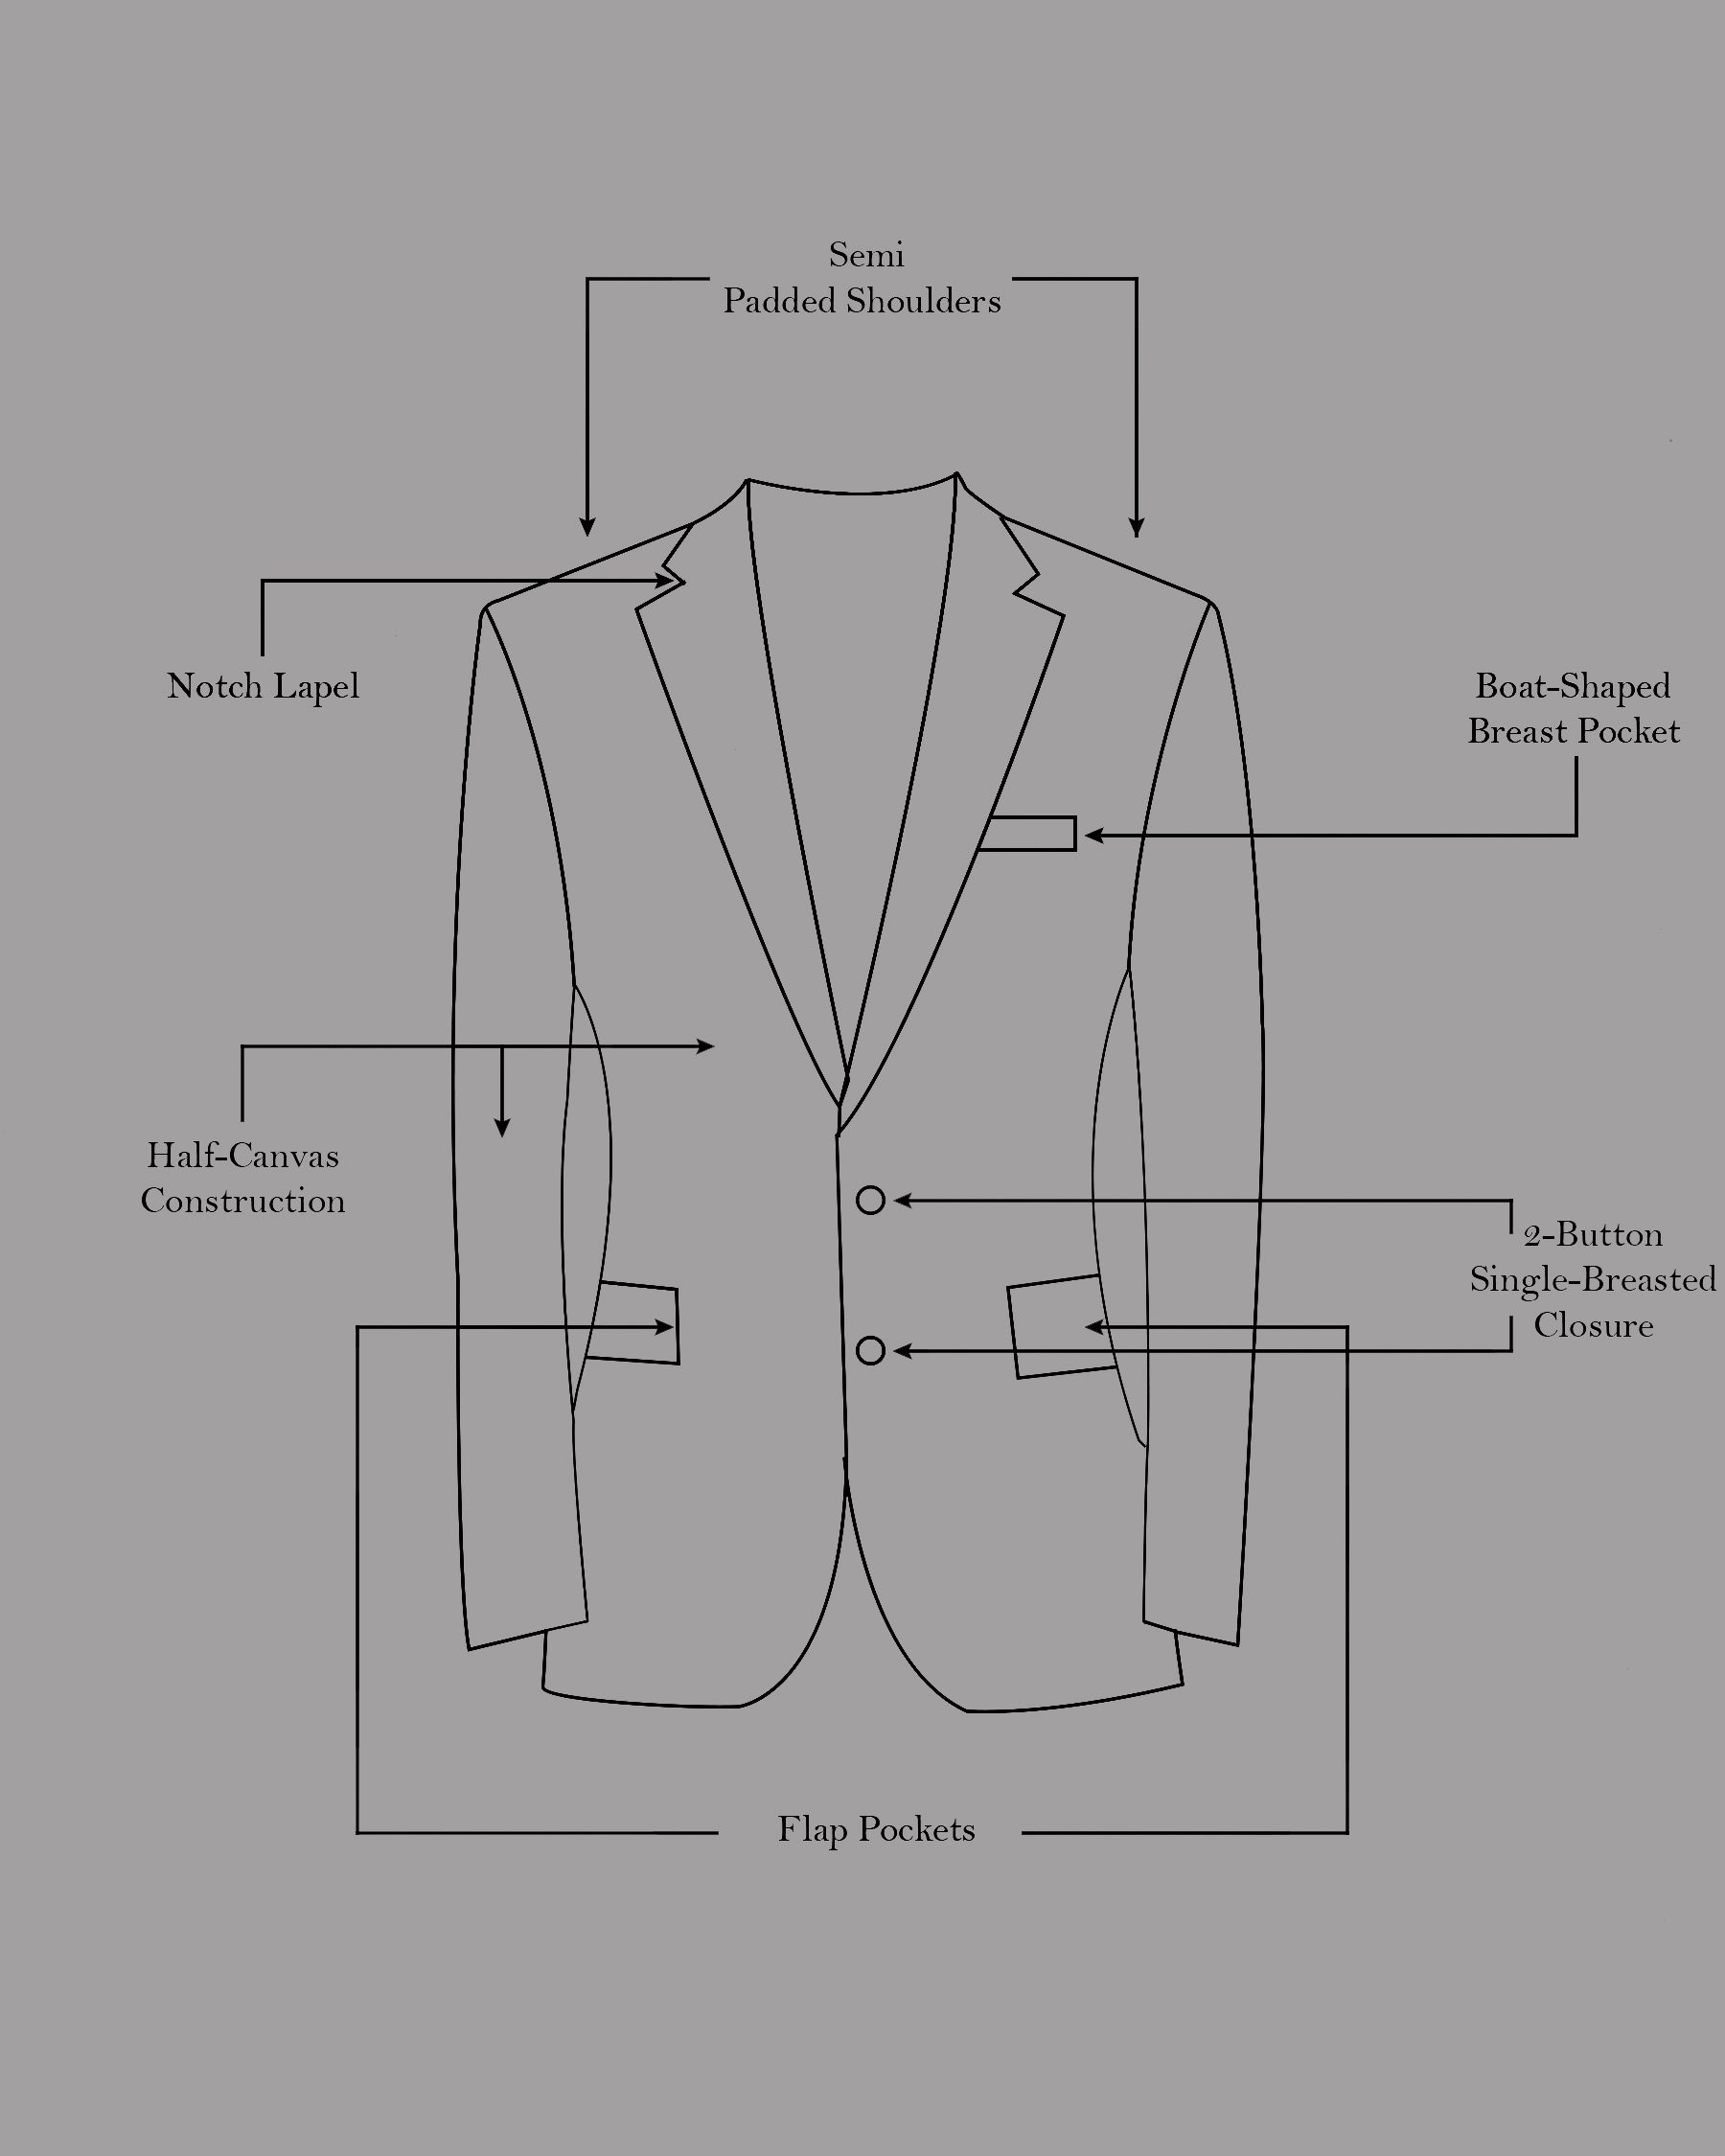 Friar Gray Premium Cotton Suit